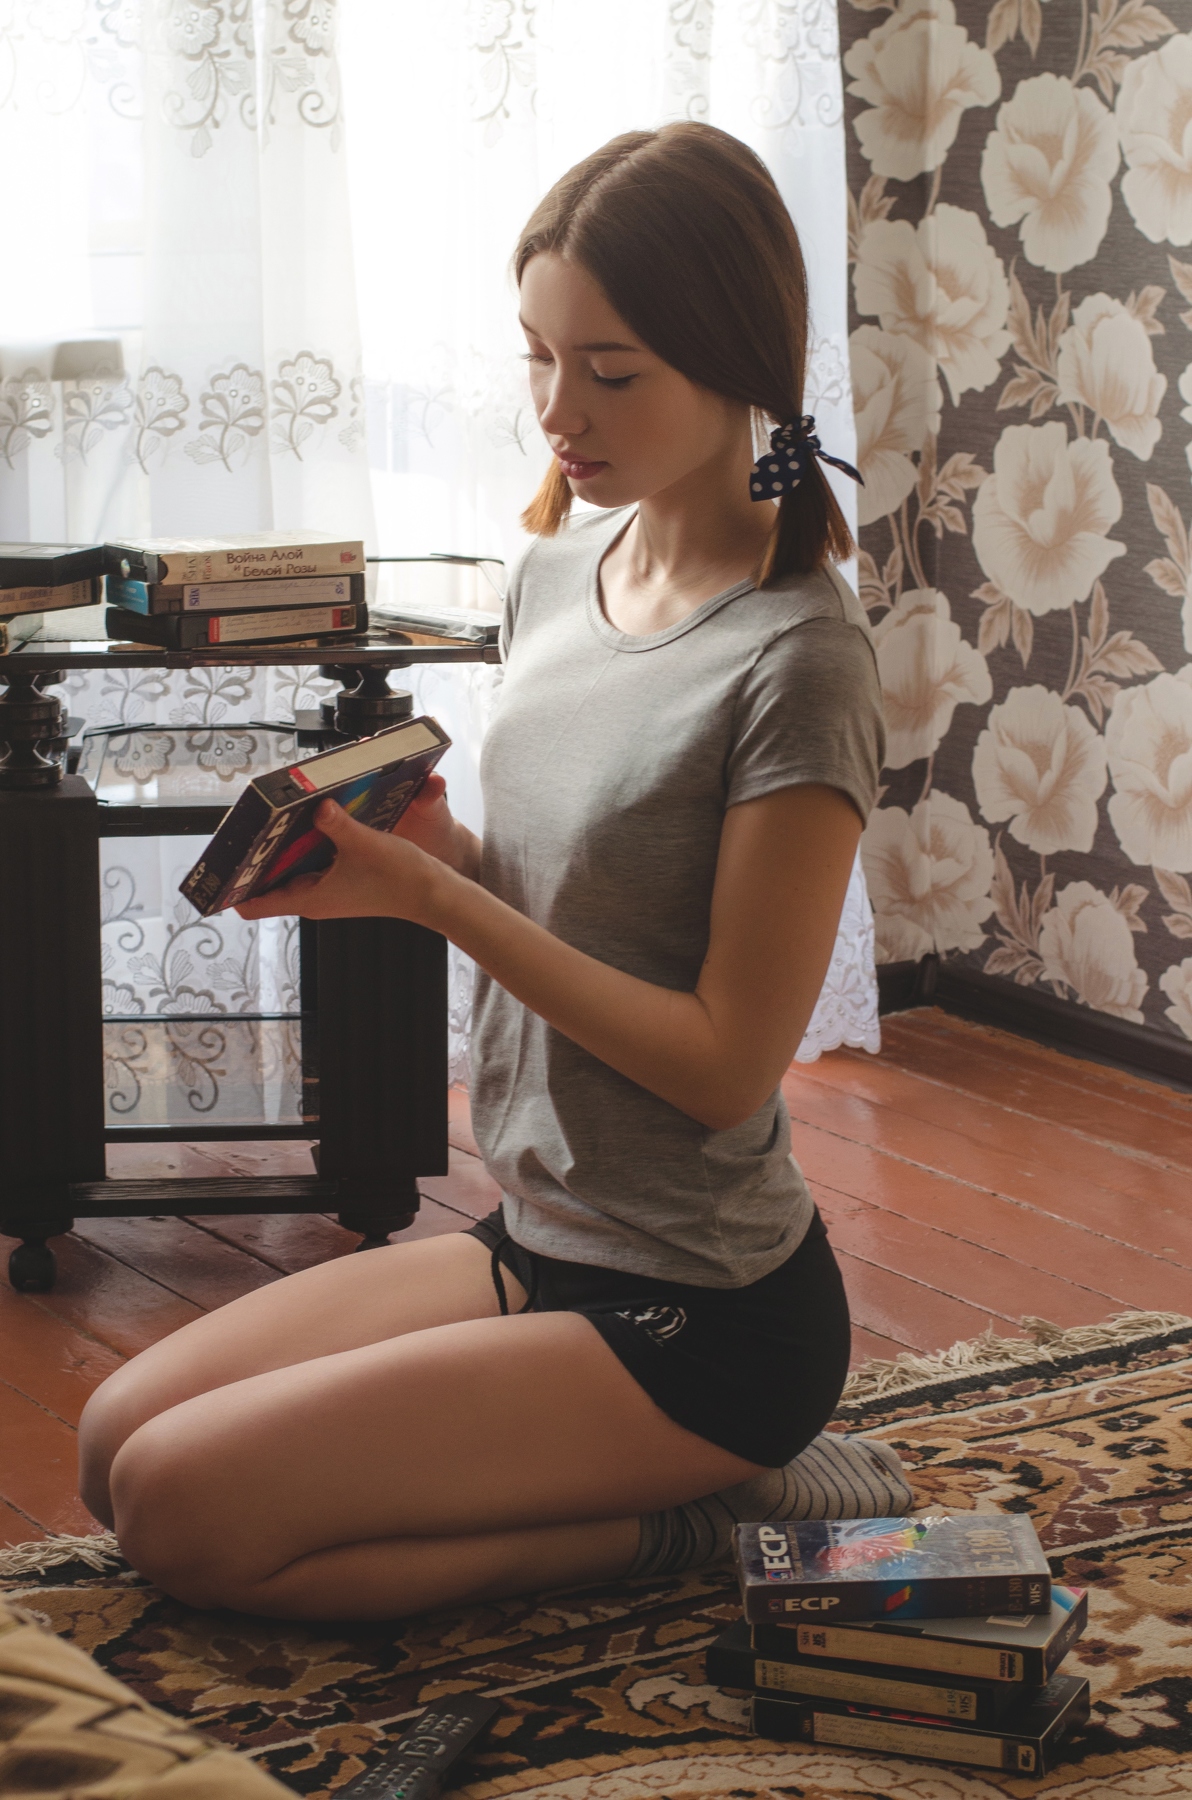 People 1192x1800 Vladislav Opletaev women brunette twintails T-shirt shorts kneeling VHS cassette carpet portrait display